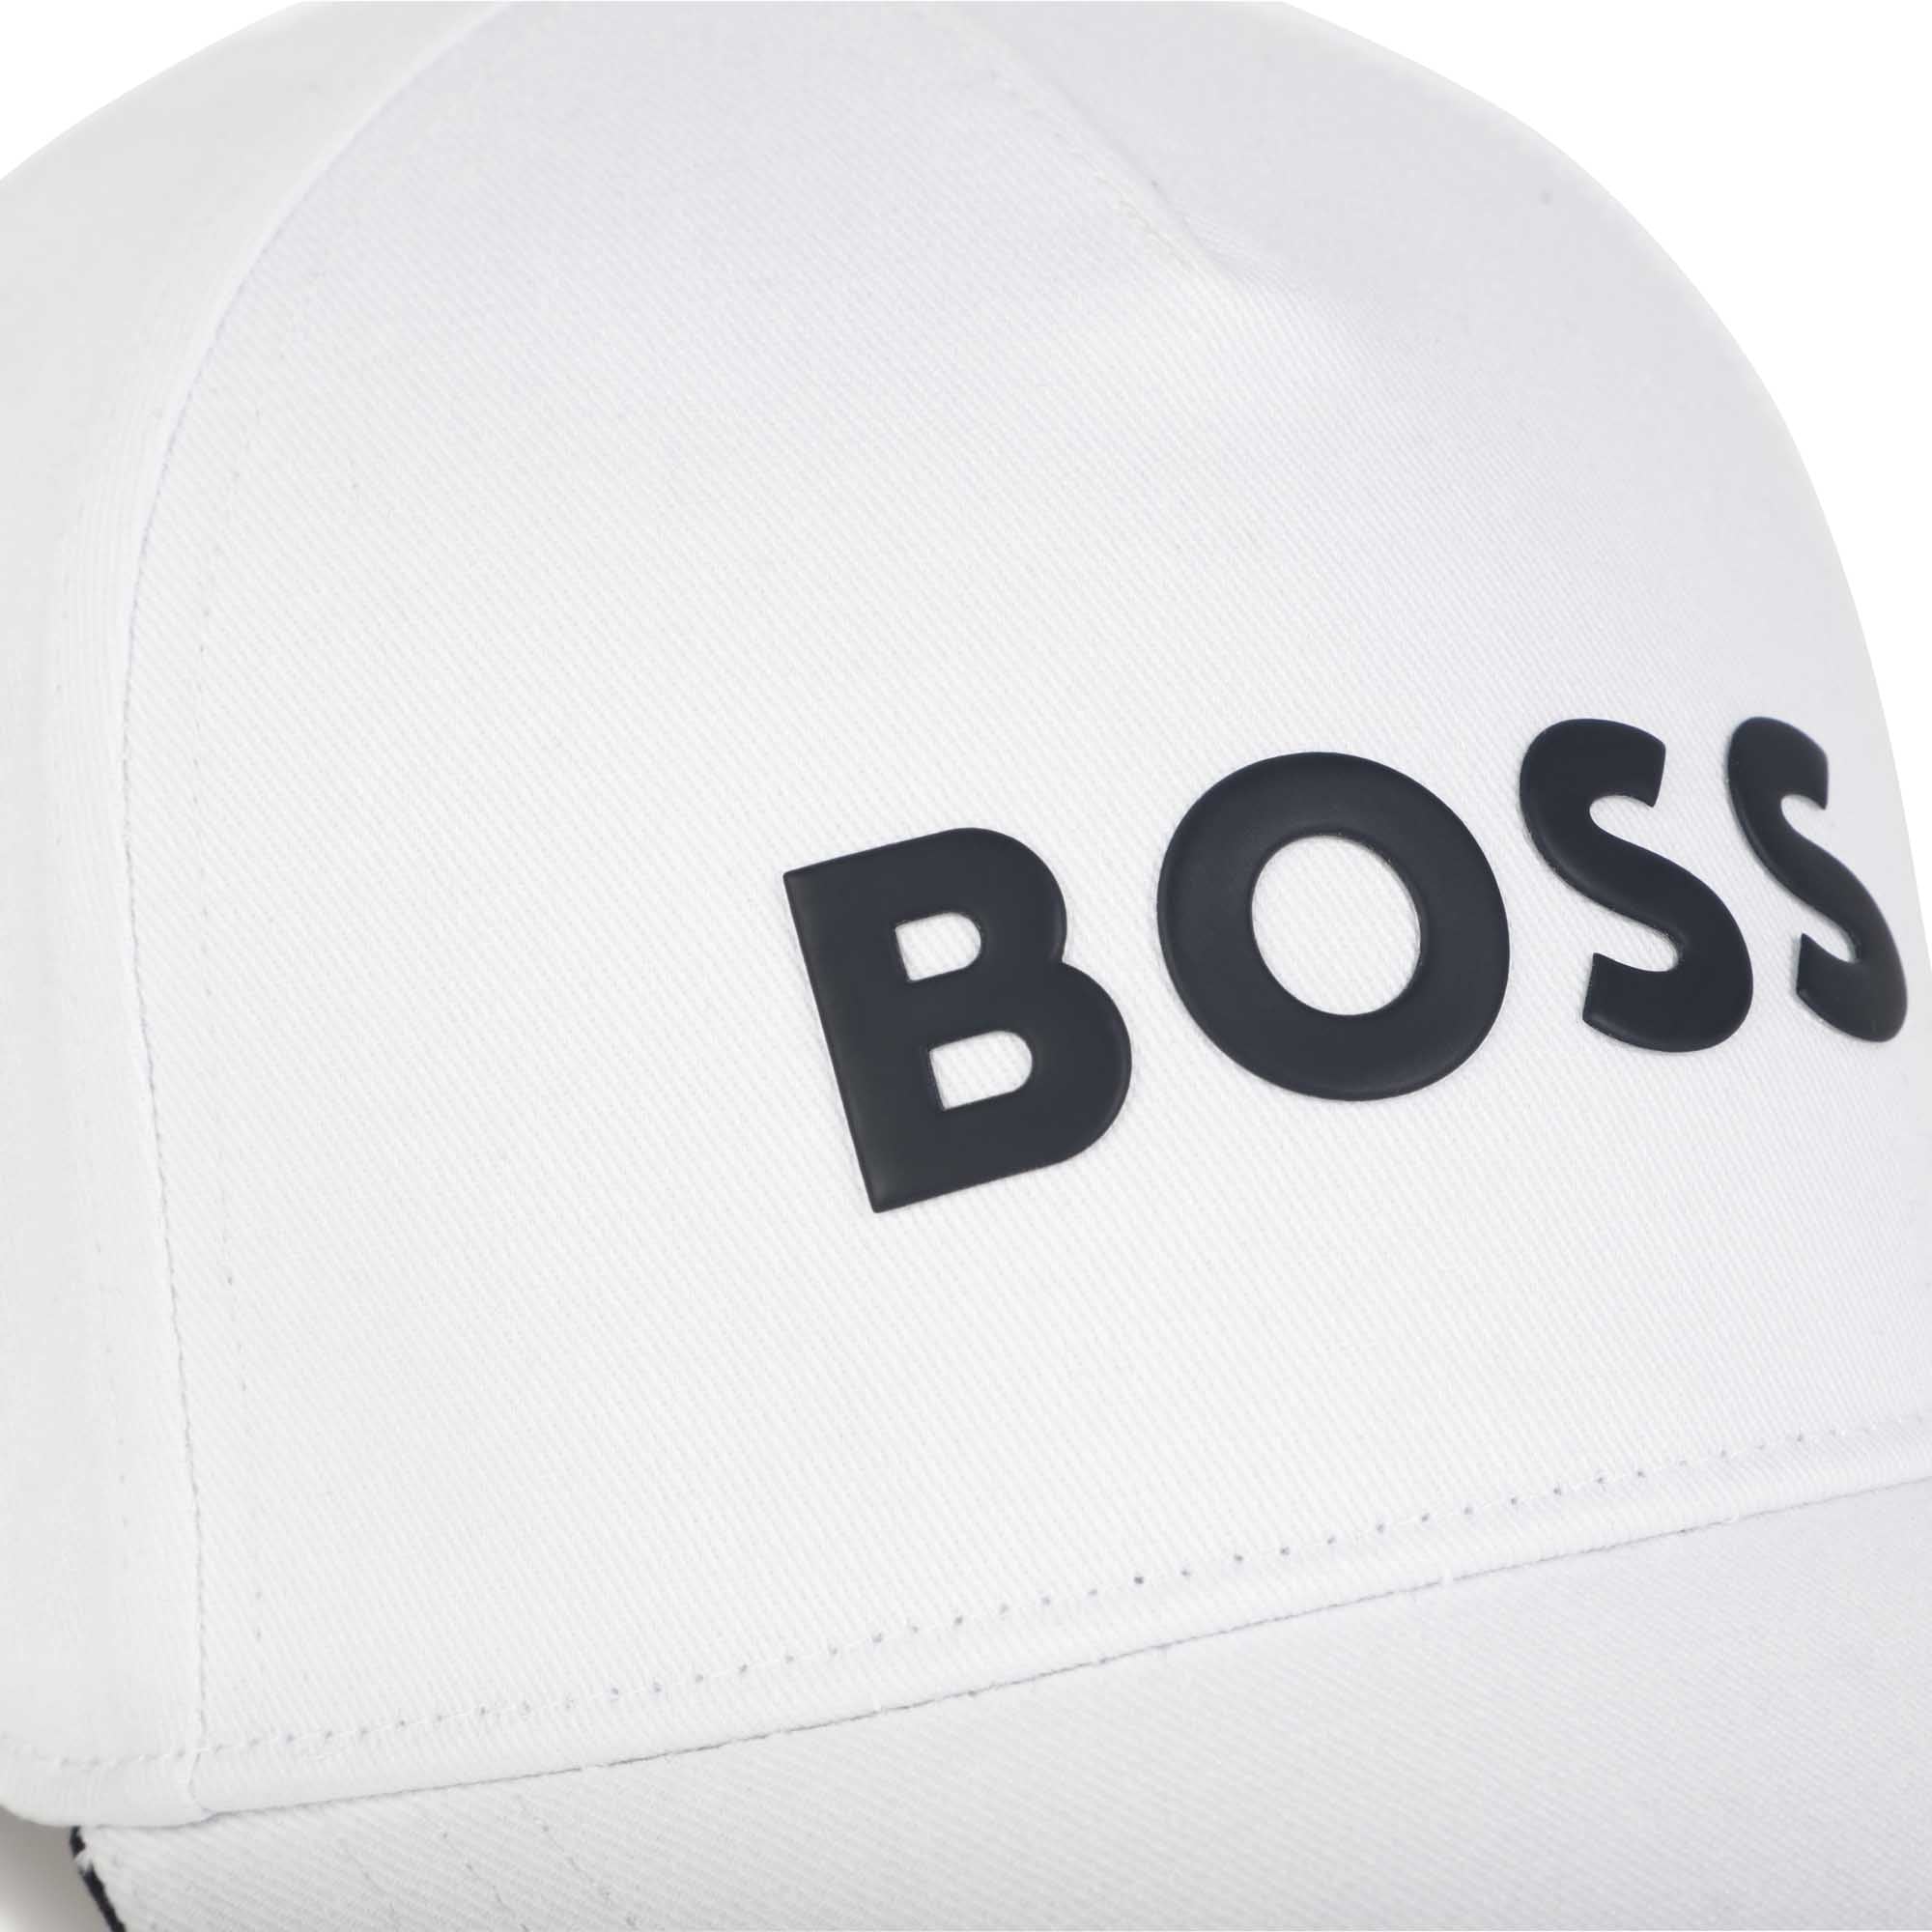 Boss Cap - White